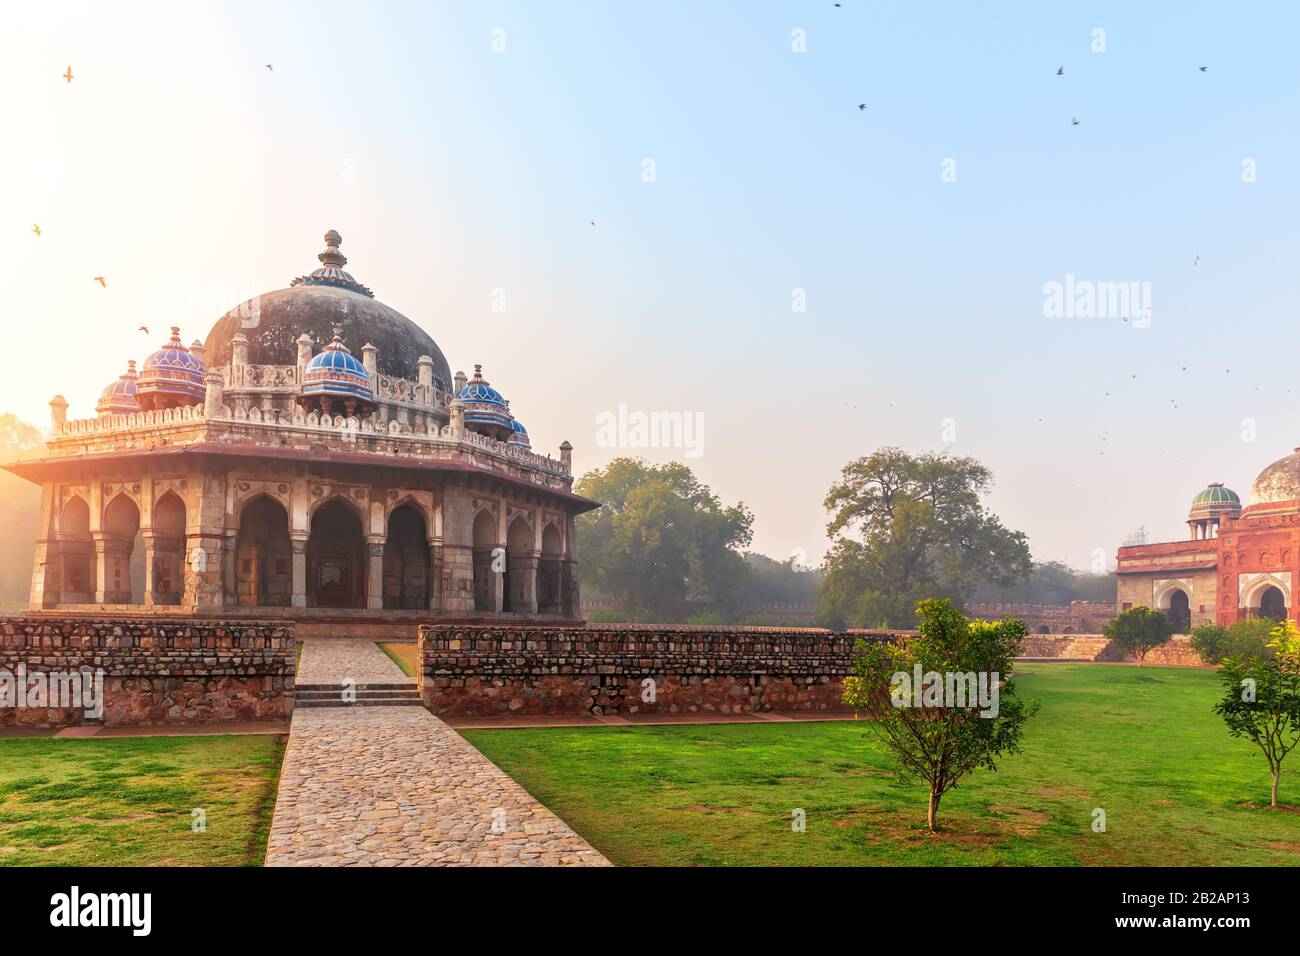 Tumba de ISA Khan en el complejo Tumba de Humayun, Nueva Delhi, India. Foto de stock